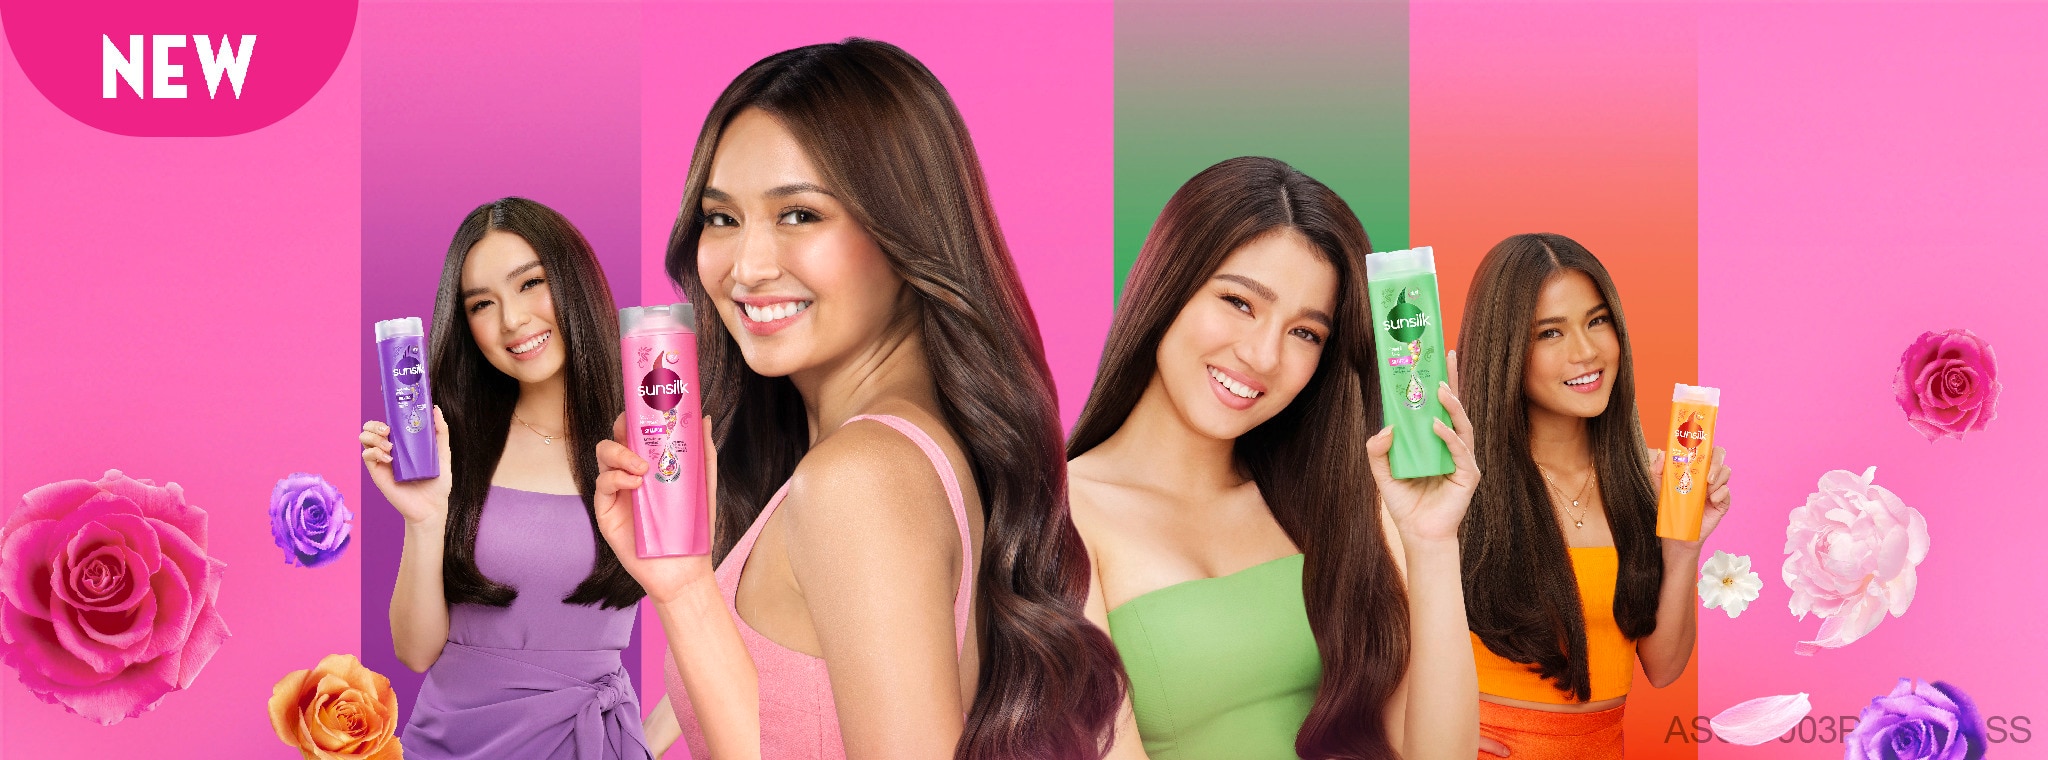 Sunsilk hair brand endorsers with new shampoo range